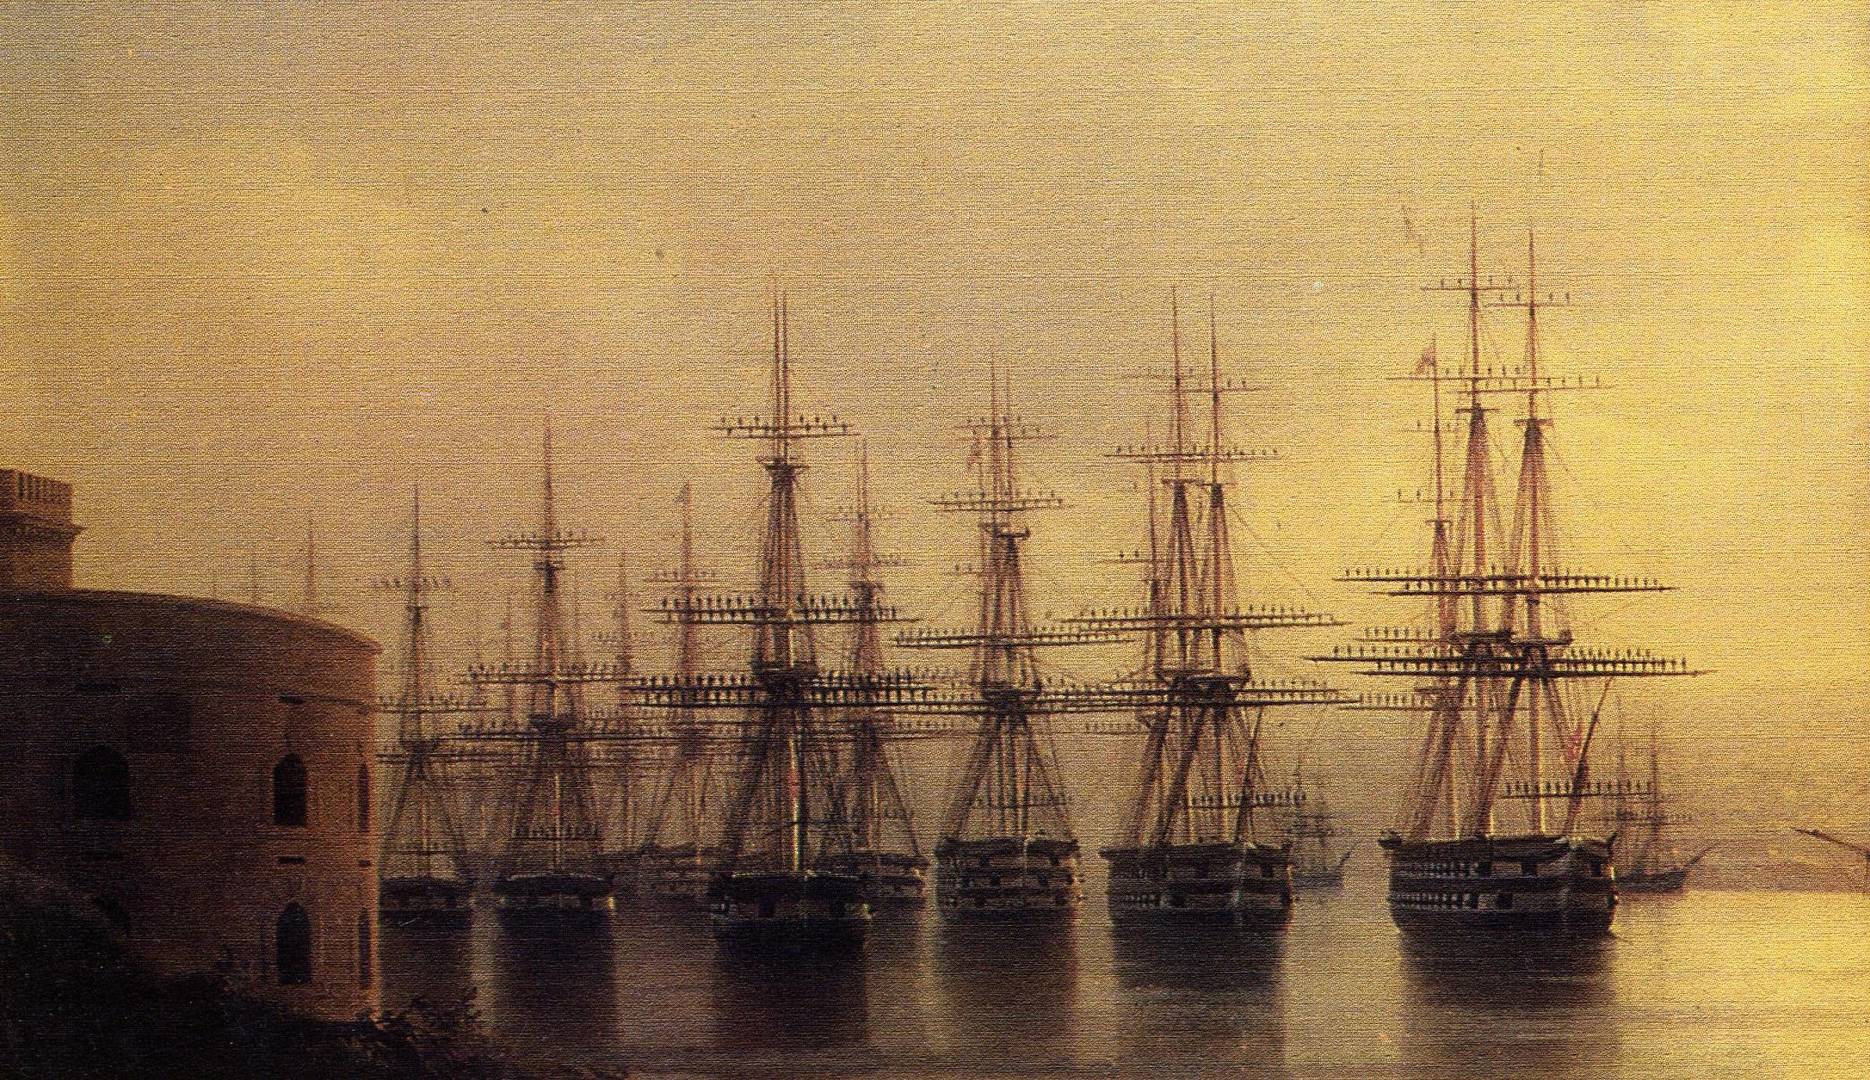 A squadron of the Black Sea Fleet ships before entering the Sevastopol roadstead